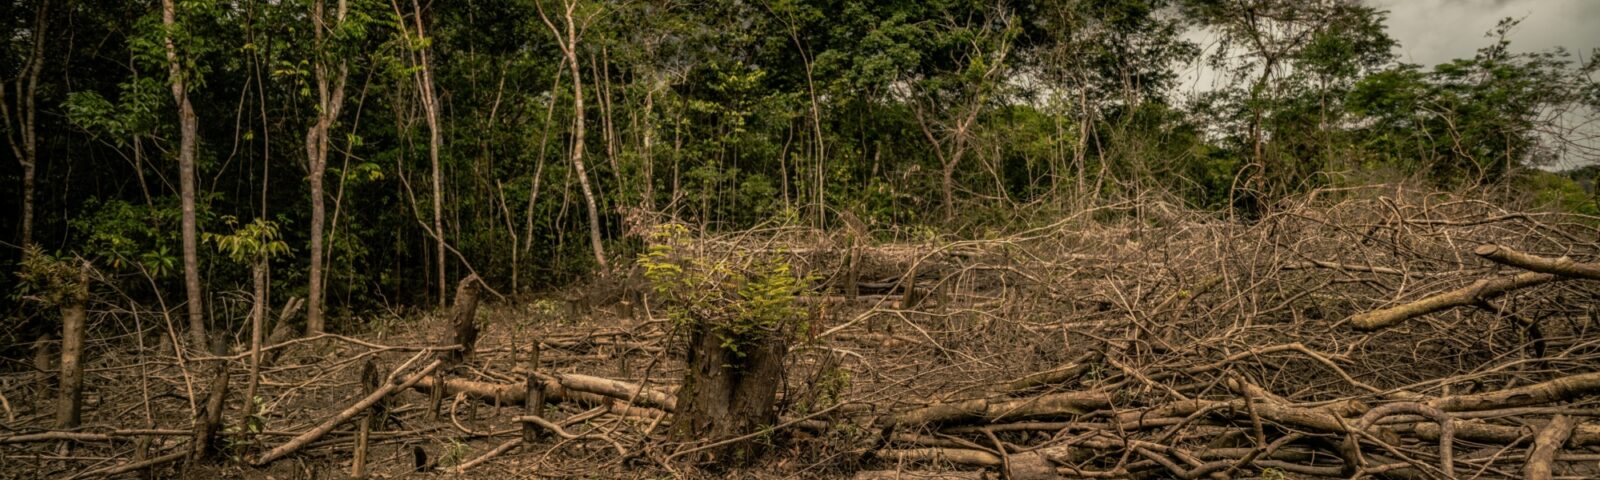 Avskoging i regnskogen, Colombia